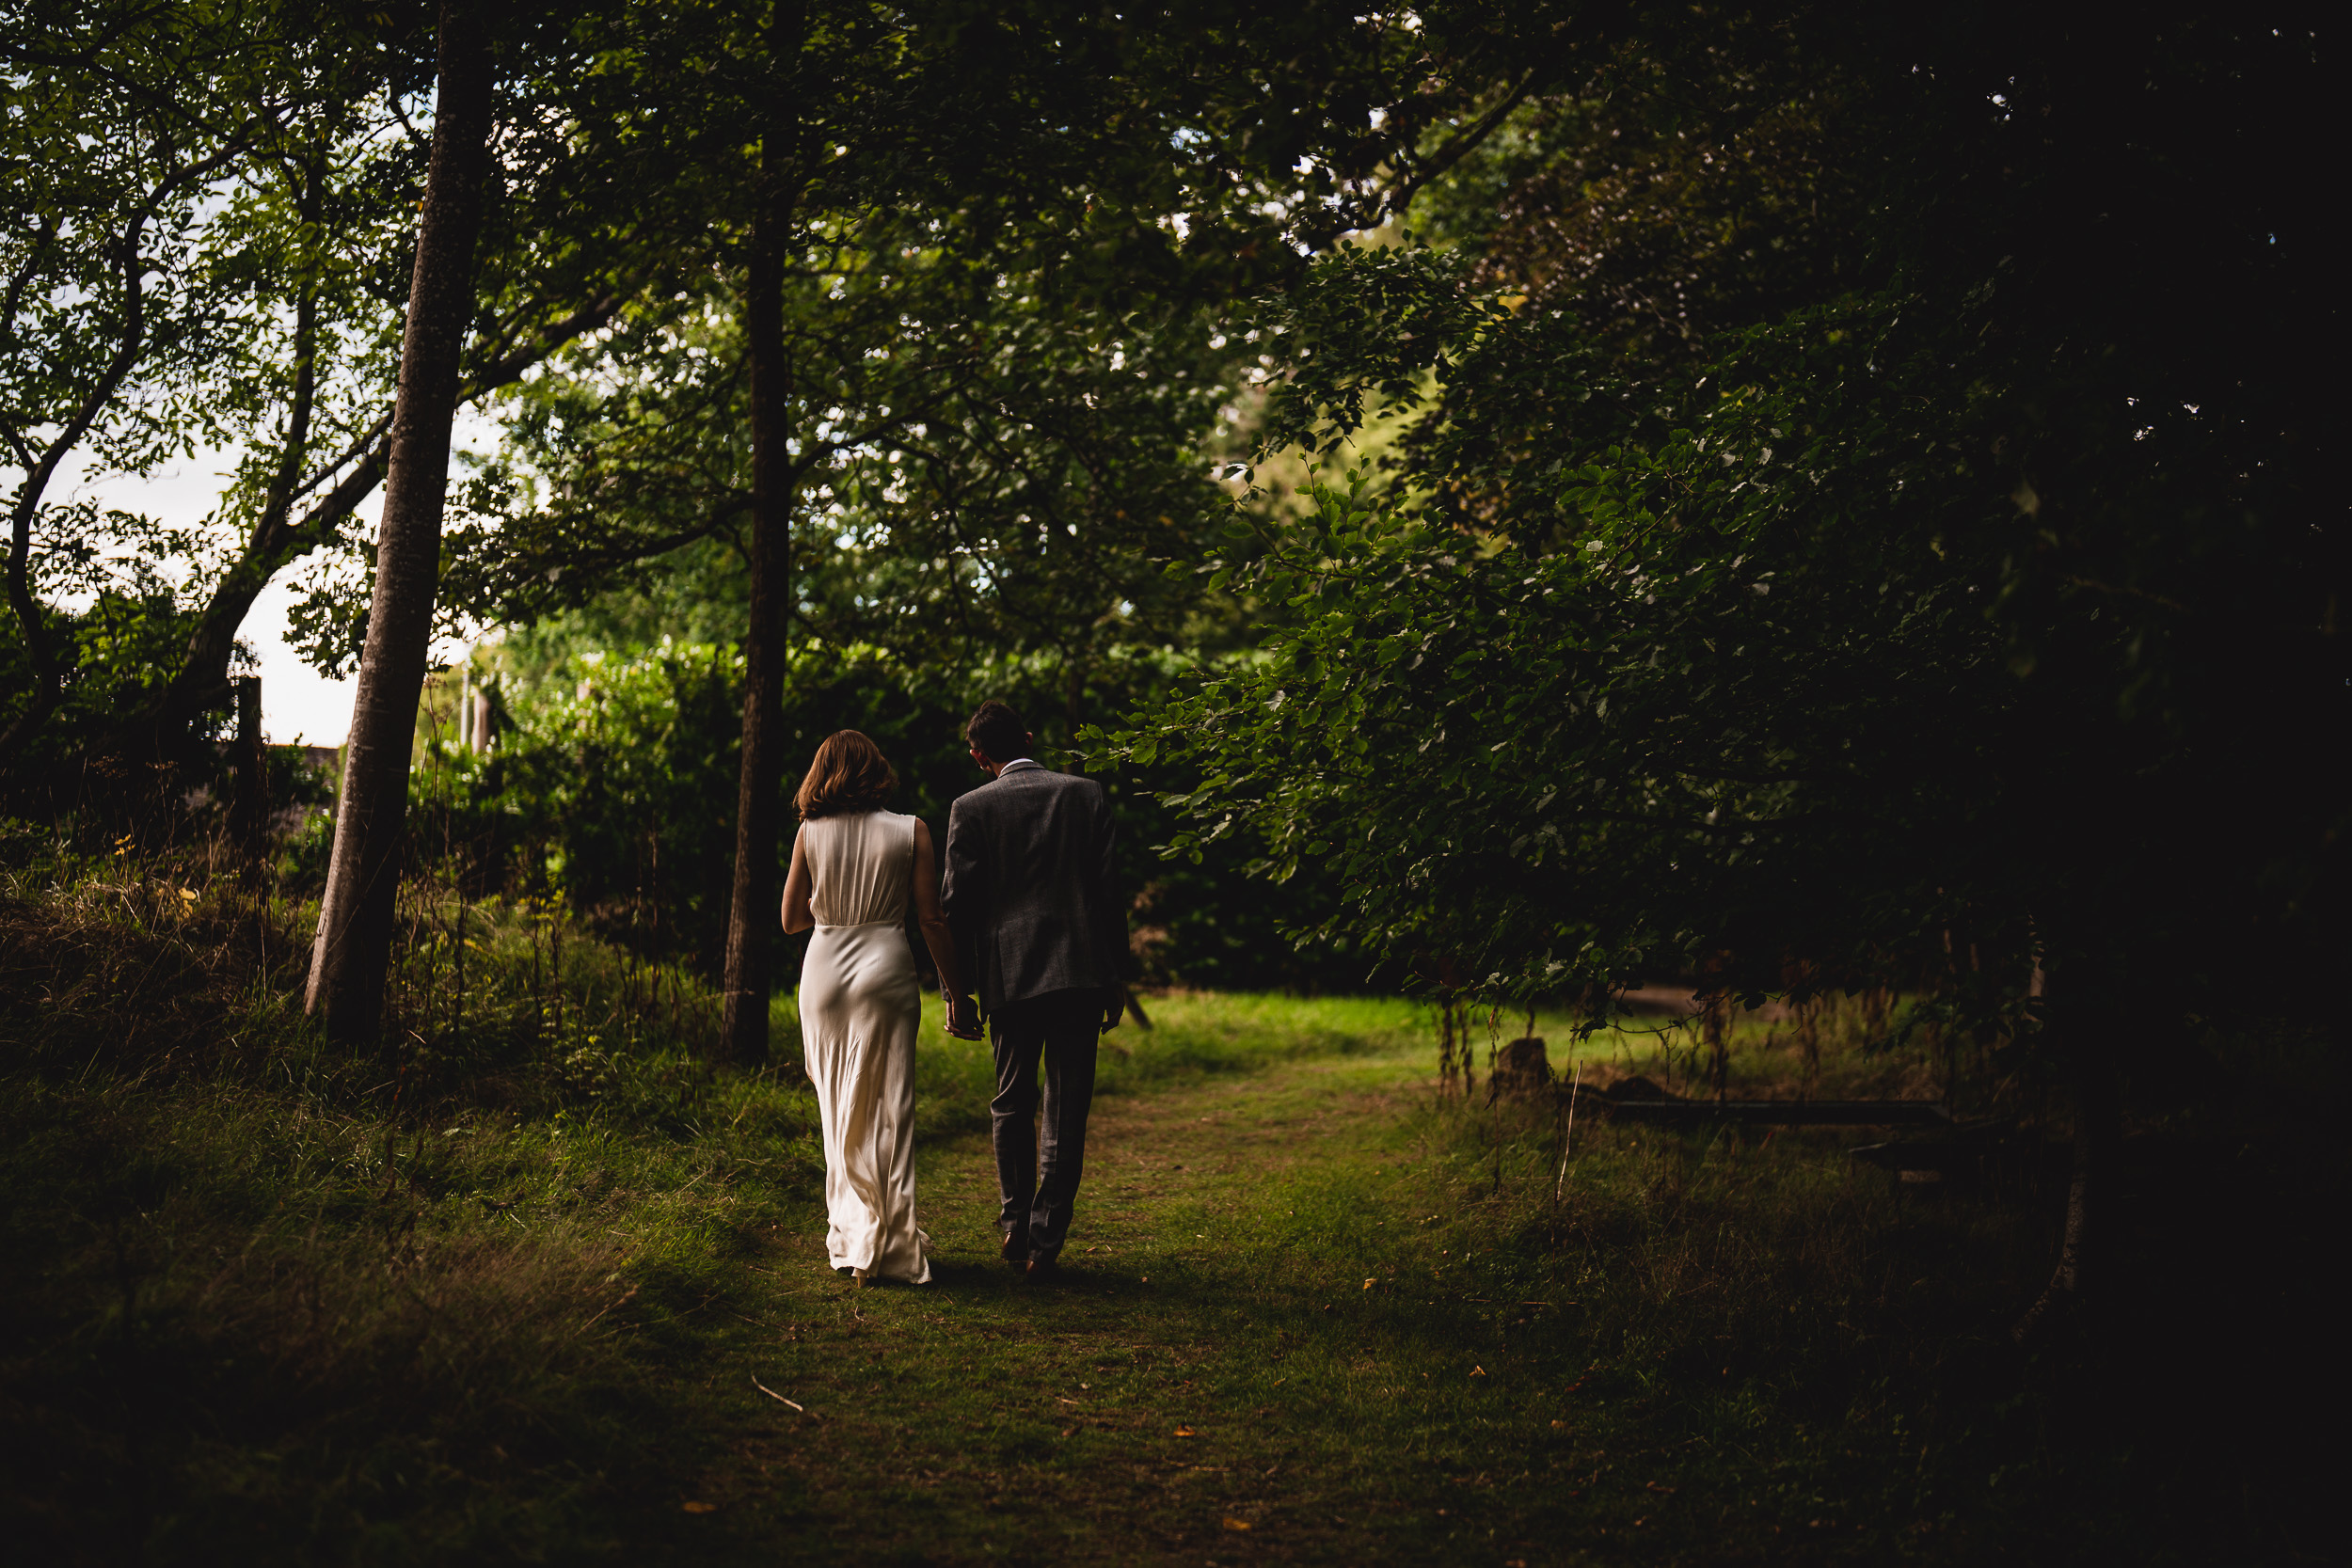 A Ridge Farm wedding: A bride and groom walking down a path in the woods.